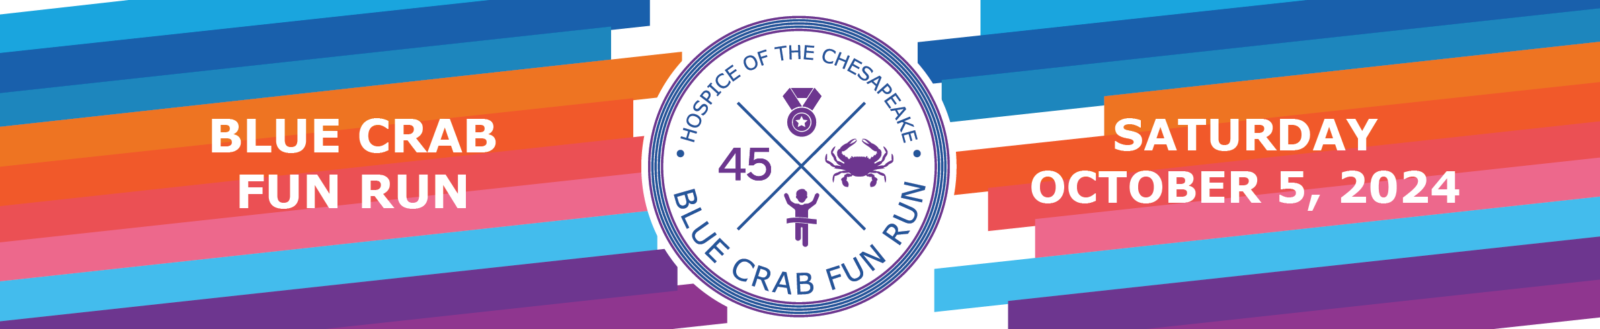 Blue Crab Fun Run - Saturday, October 5, 2024 9:00 AM to 1:00 PM